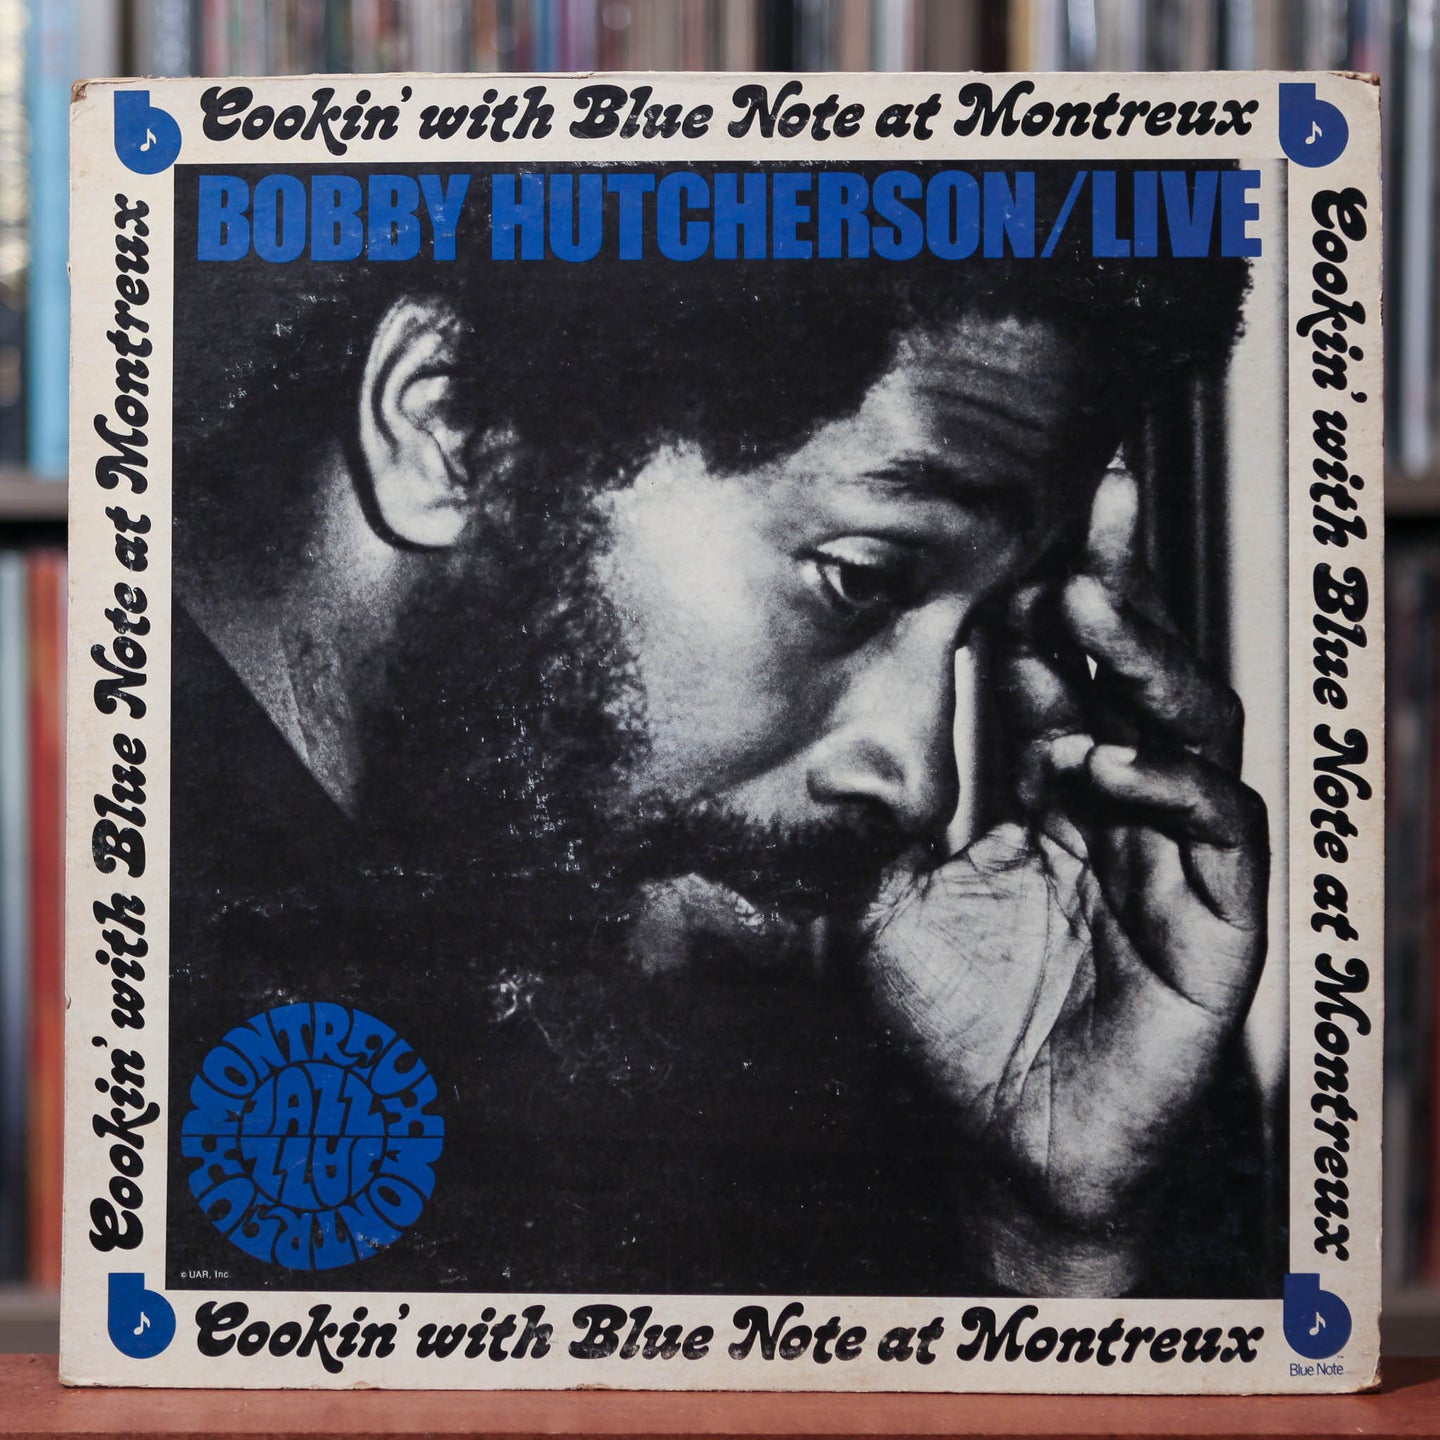 Bobby Hutcherson - Live At Montreux - 1974 Blue Note, VG/VG+